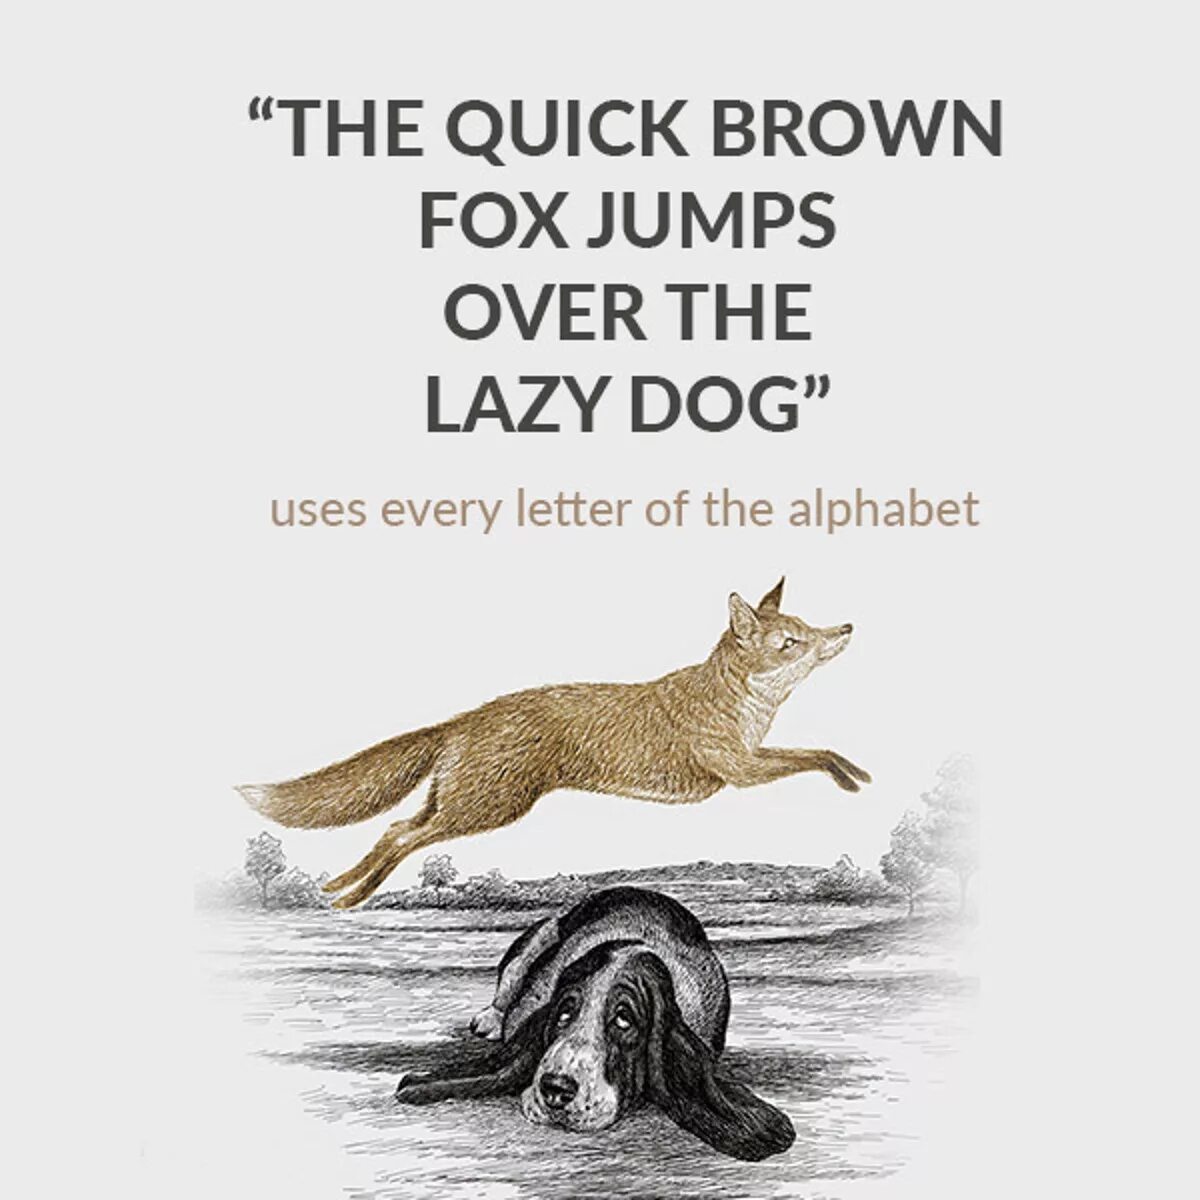 The quick brown. Brown Fox Jumps over the Lazy Dog. The quick Brown Fox. Коричневая лиса прыгает через ленивую собаку. The quick Brown Fox Jumps.